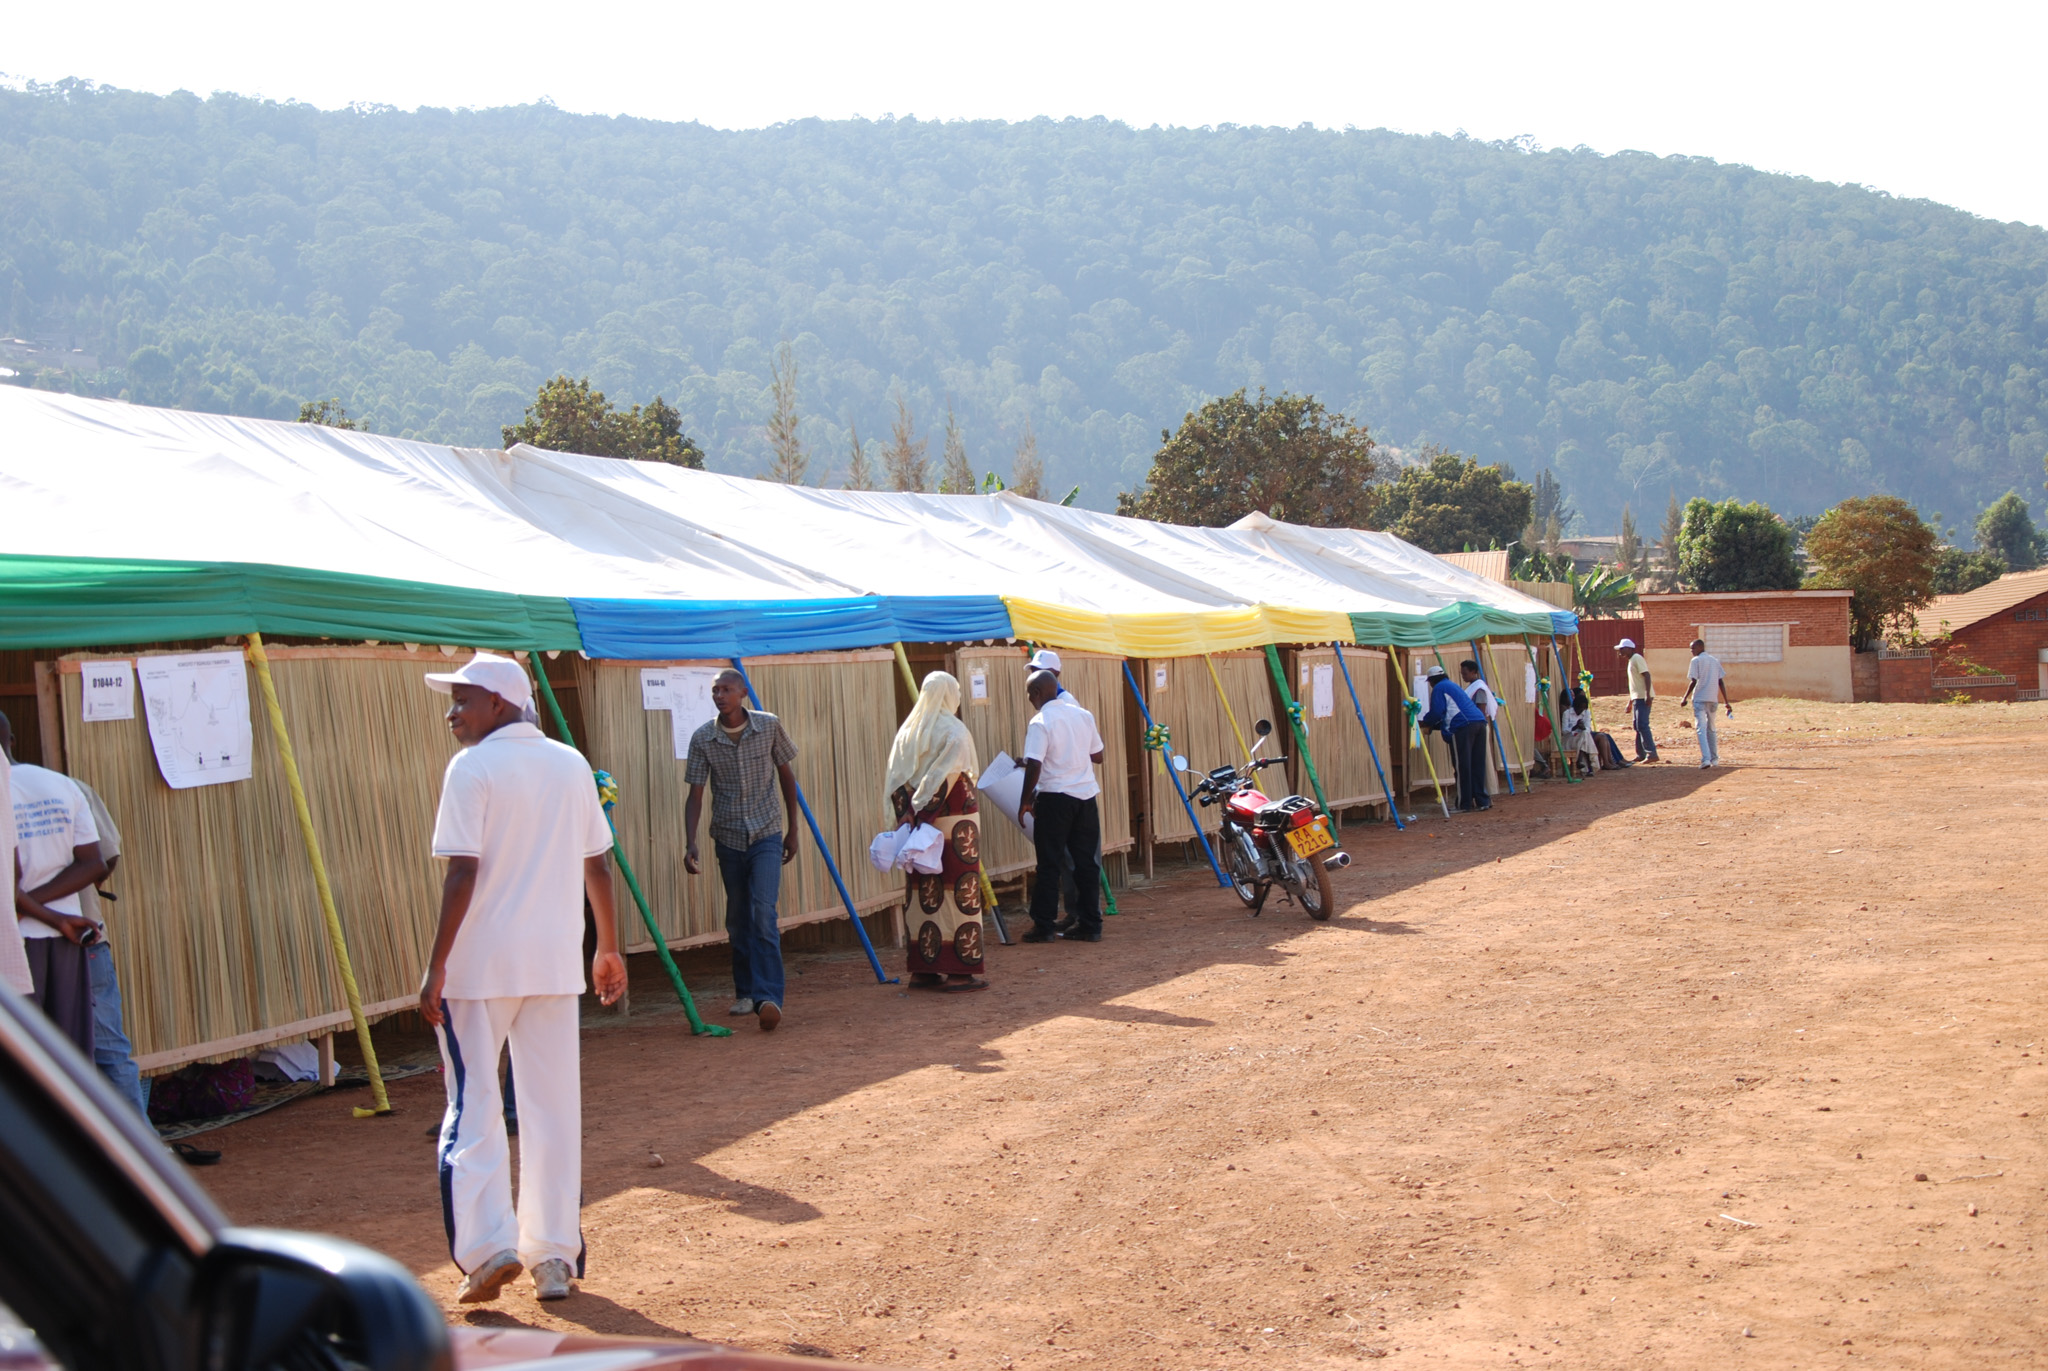 Polling station in Rwanda